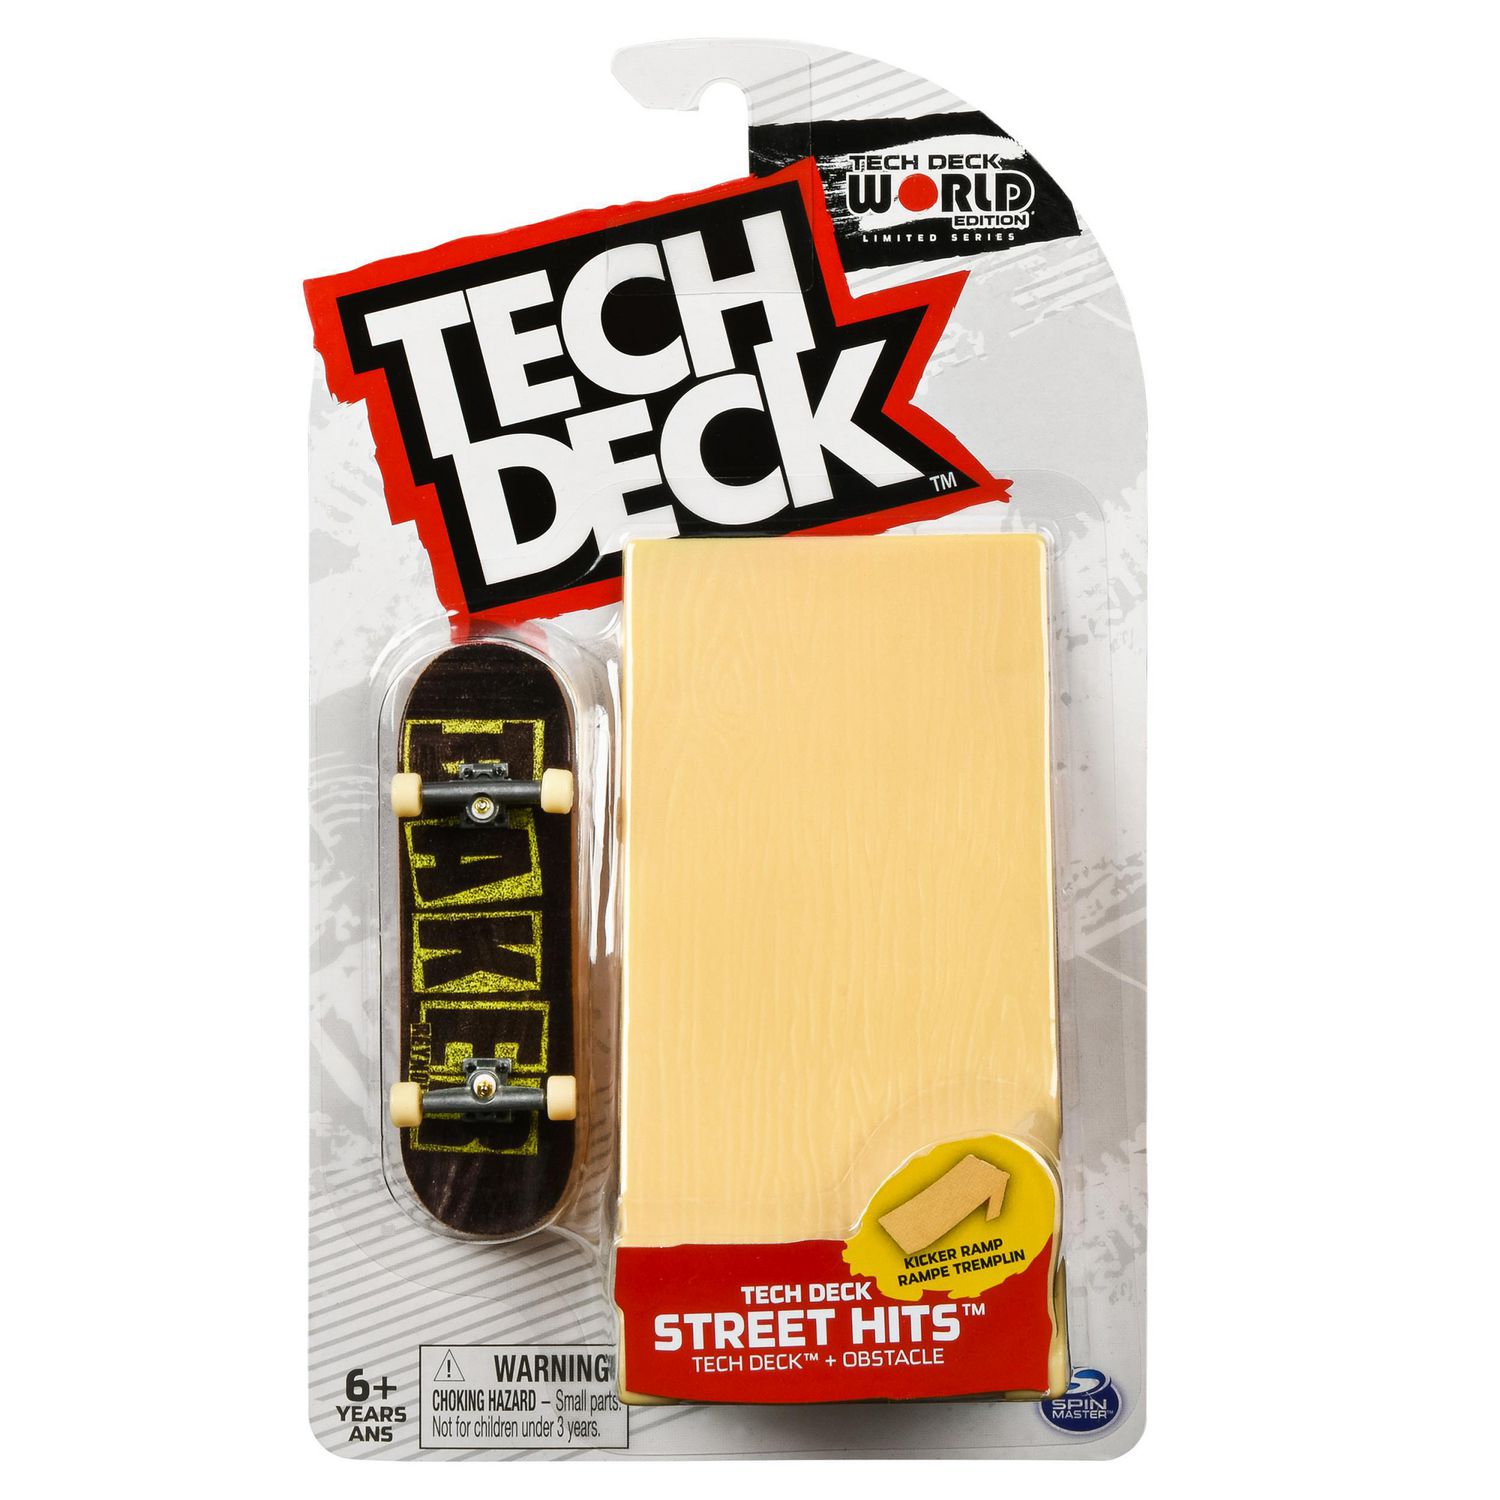 Tech Deck BAKER STREET HITS KICKER RAMP NEW